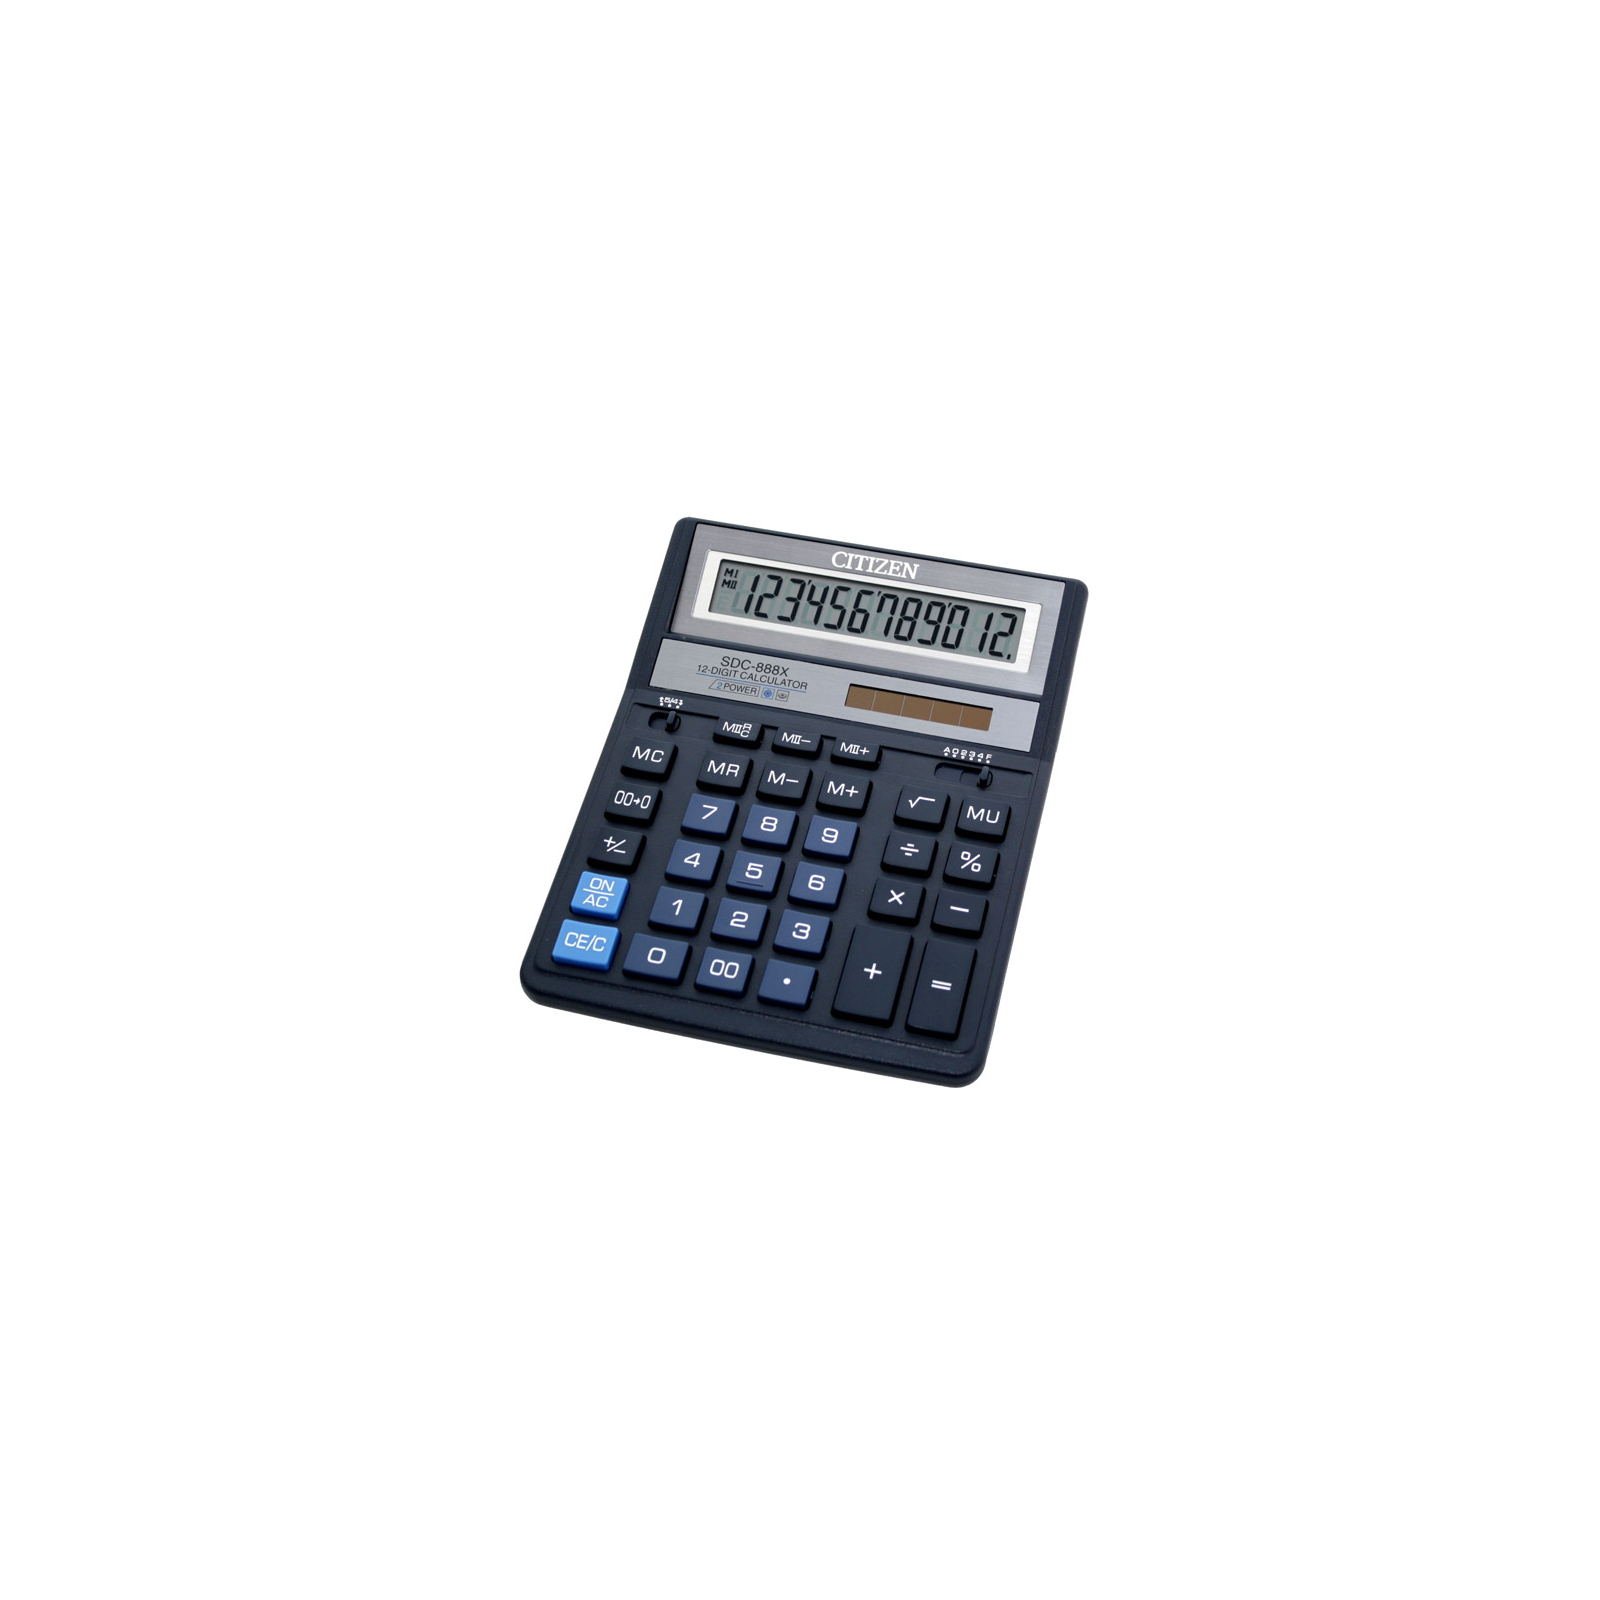 Калькулятор Citizen SDC-888XBL (1303XBL)